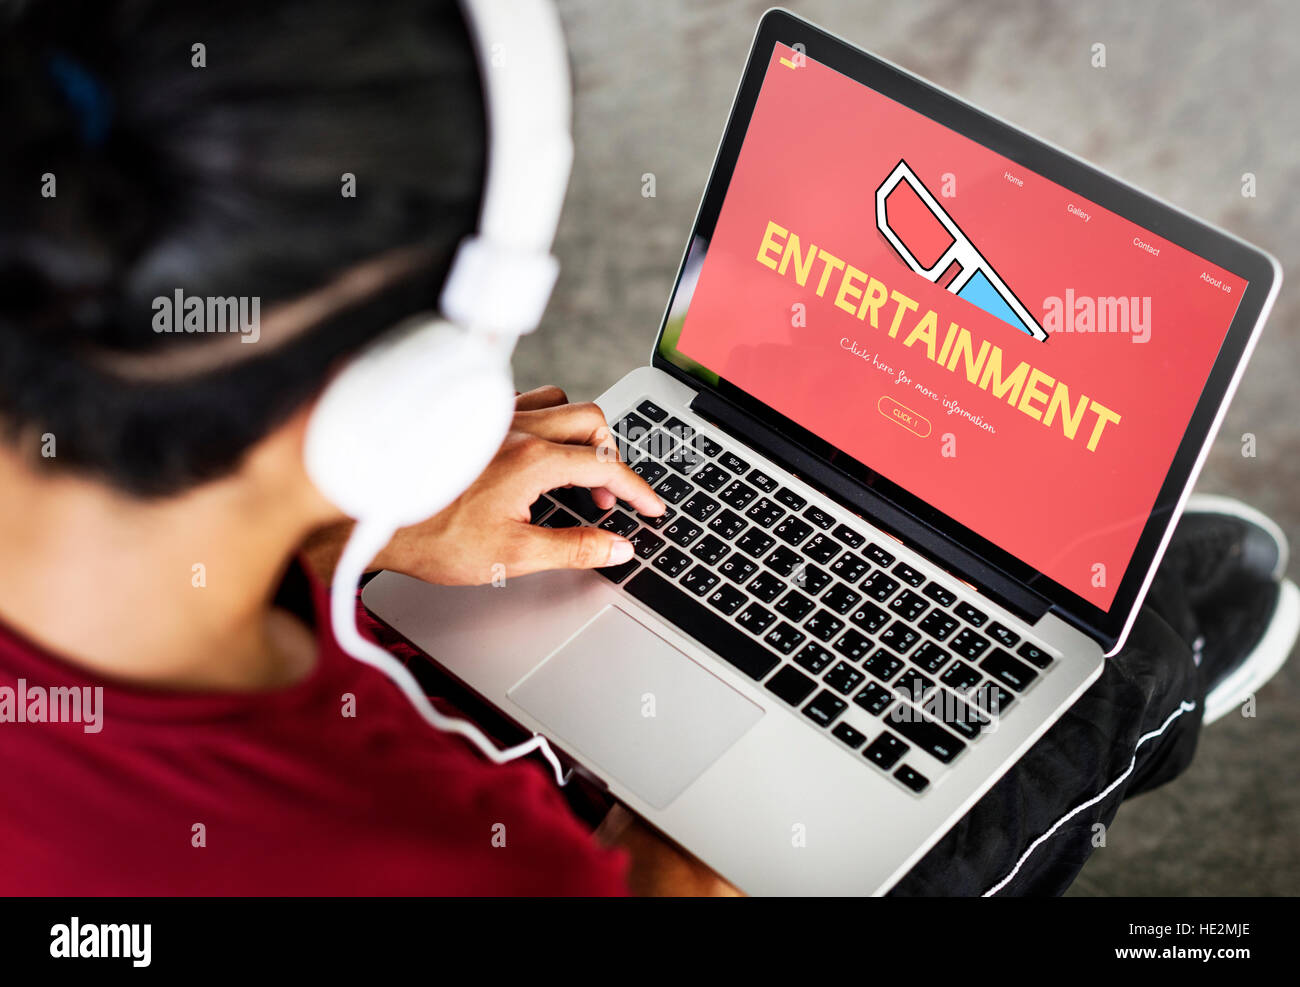 Entertainment 3D Glasses Movie Media Recreation Online Concept Stock Photo